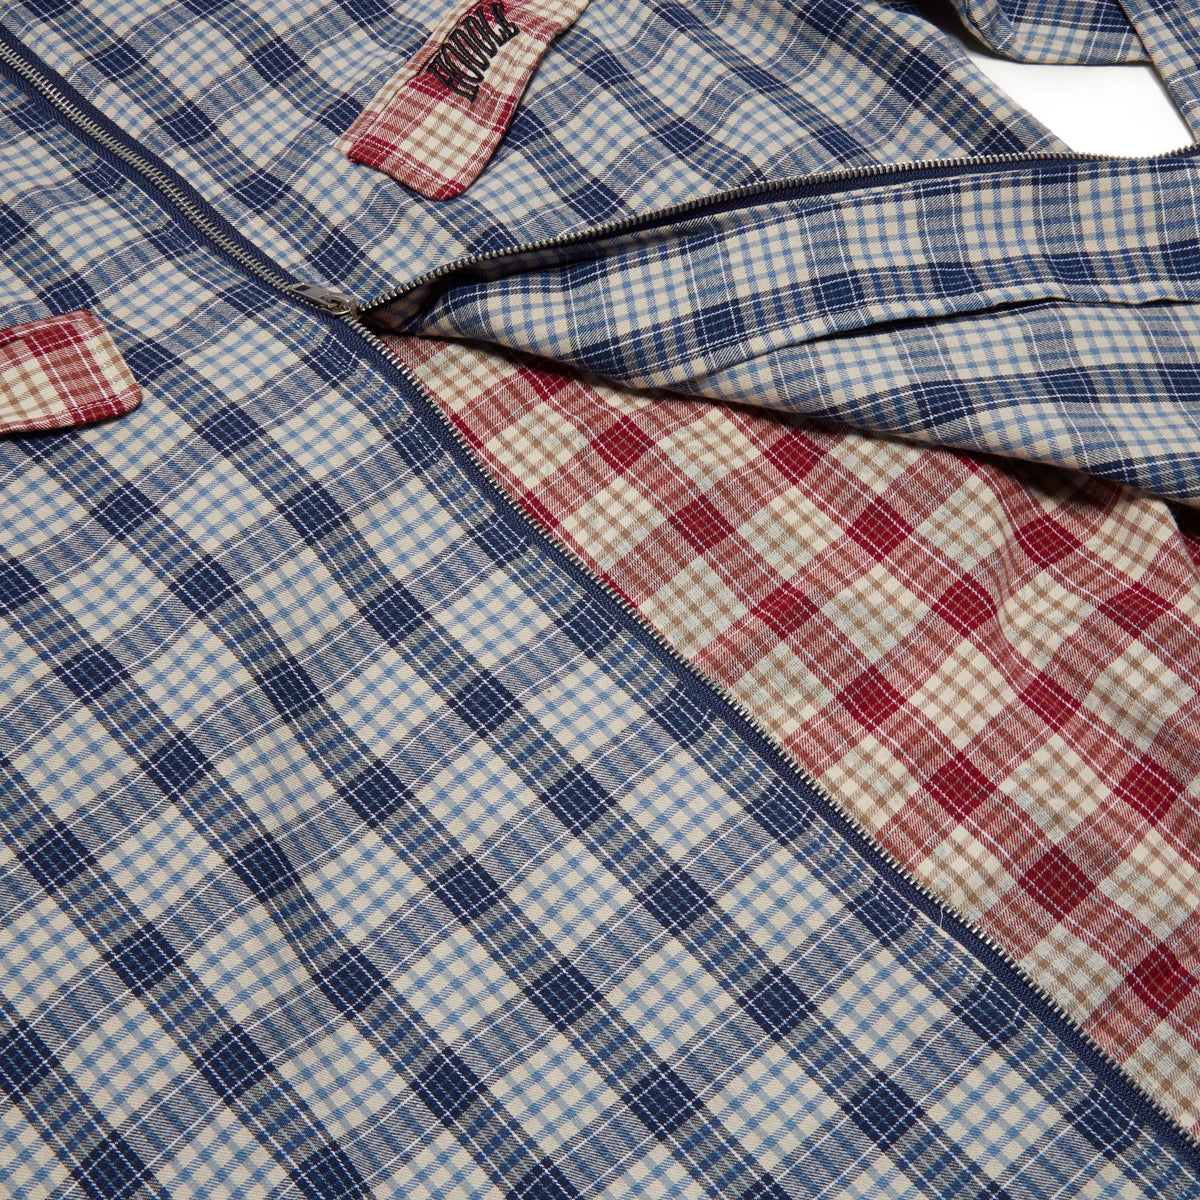 Hoddle Skyline Zip Up Flannel Shirt - Multi Plaid image 4